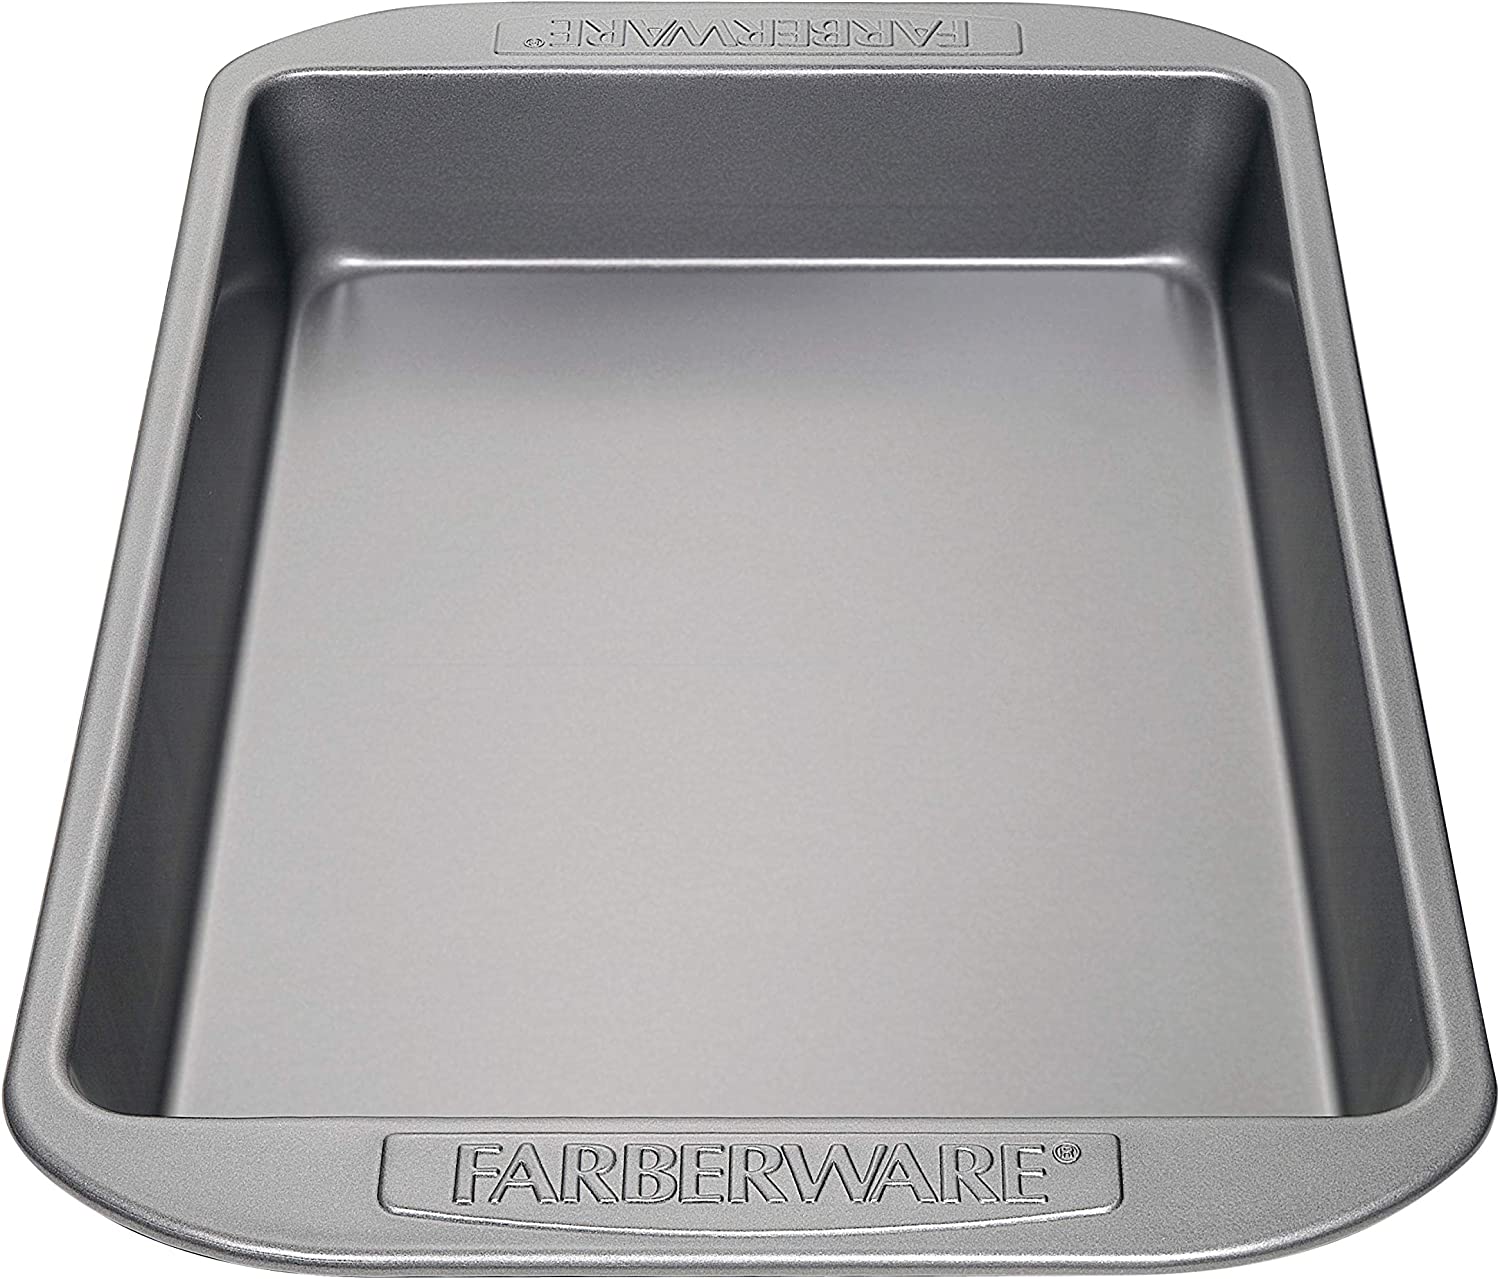 Farberware Oven-Safe Alloy Steel 9×13-Inch Baking Pan